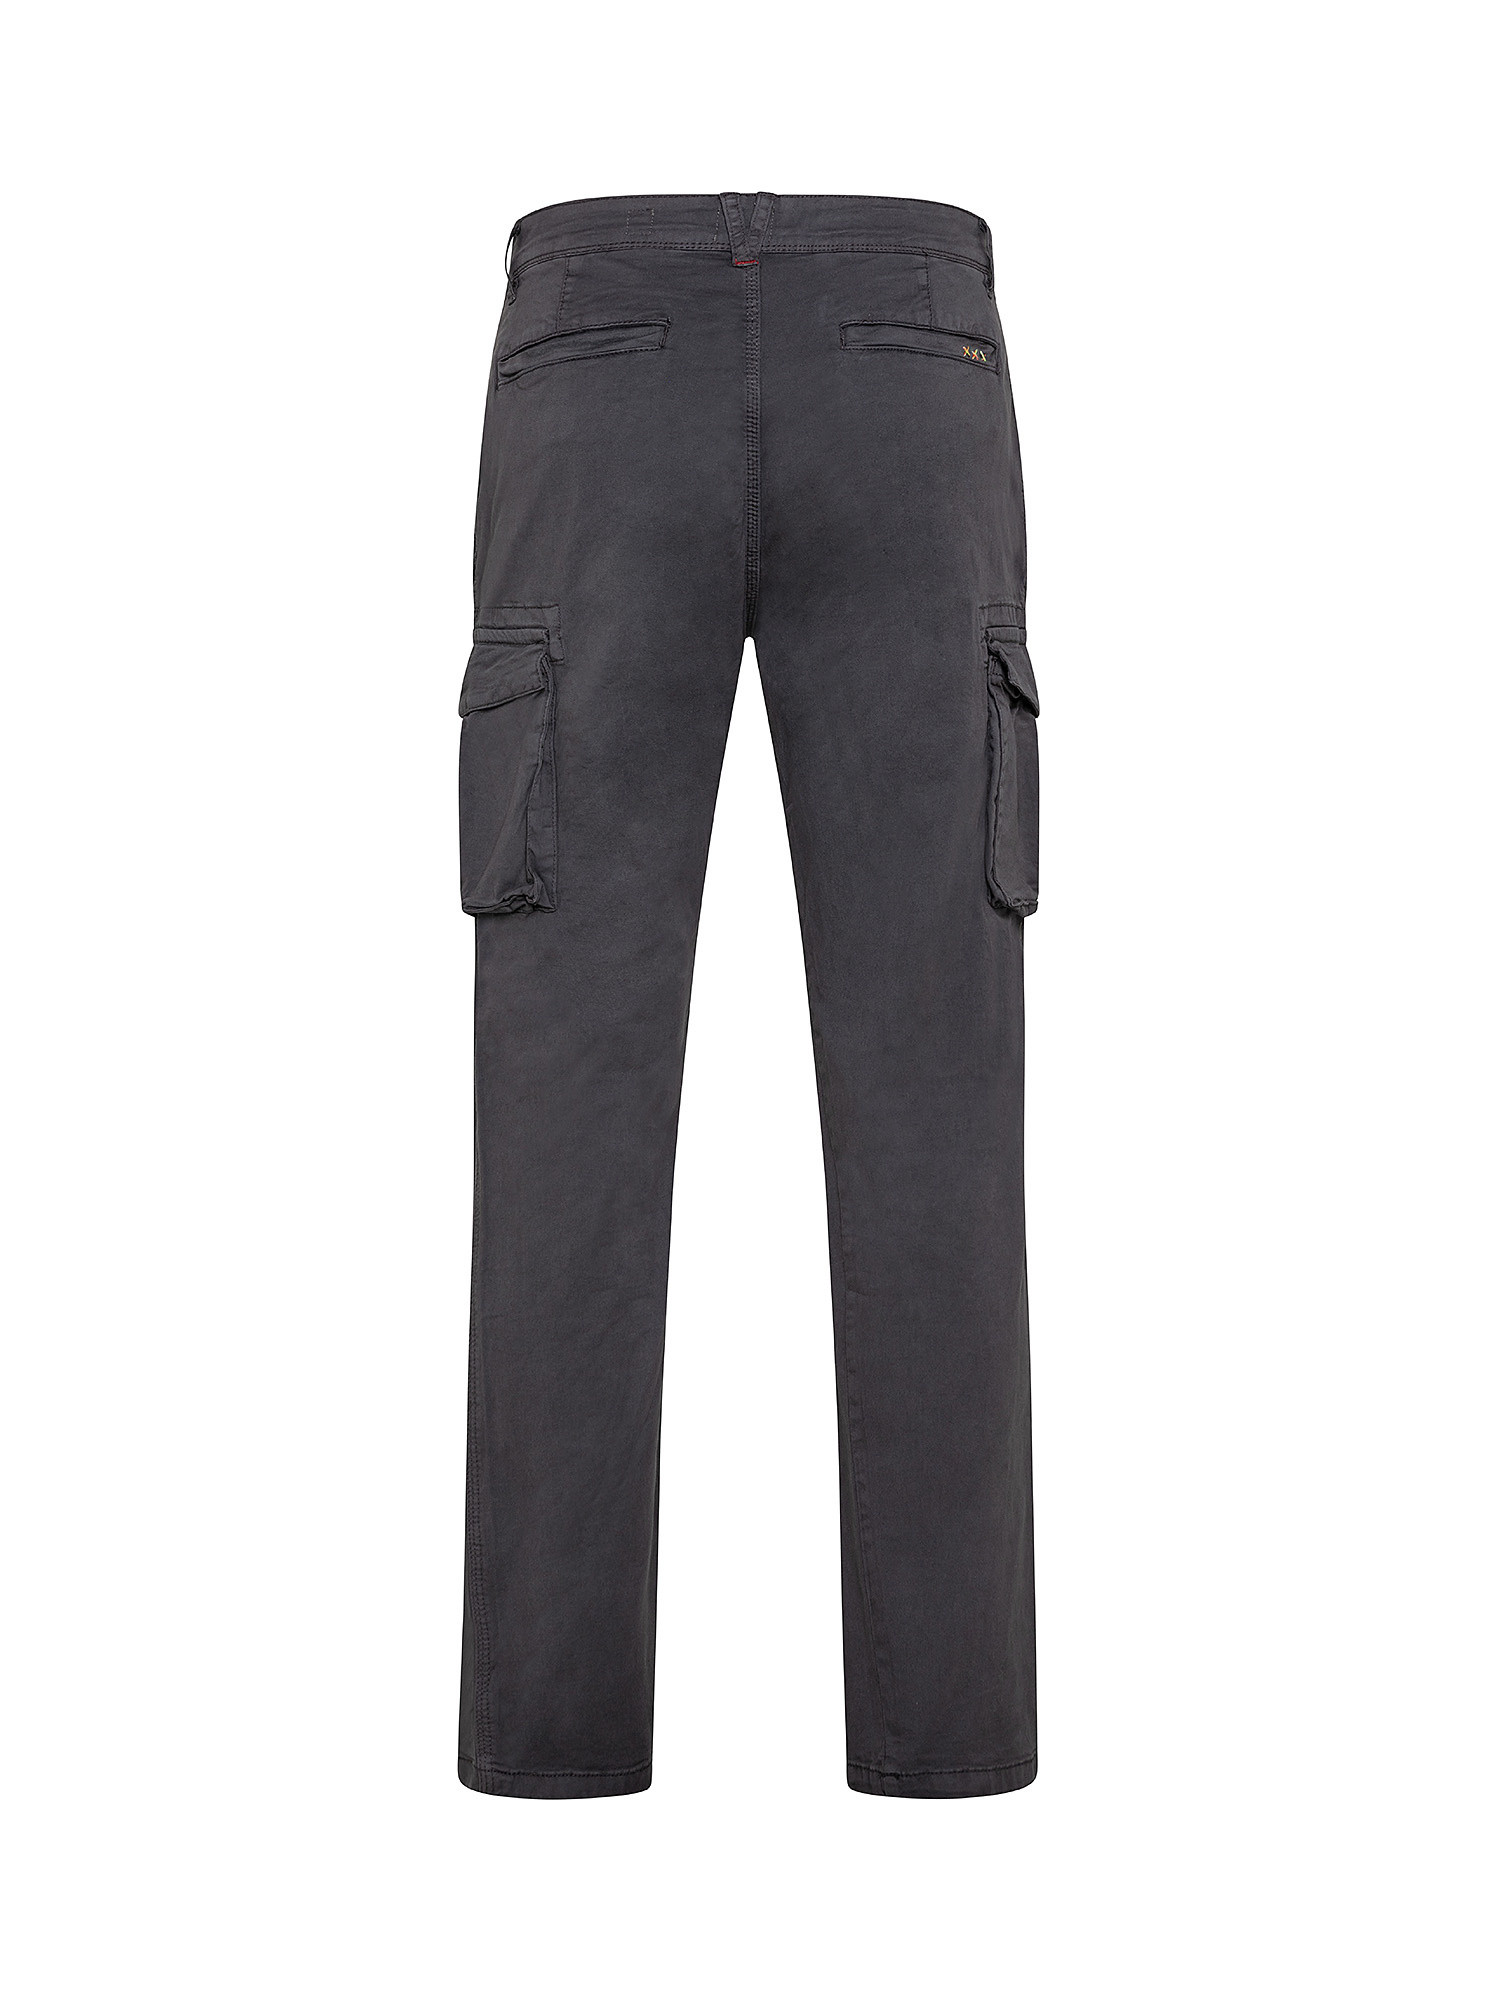 Pantalone cargo cotone stretch, Grigio, large image number 1